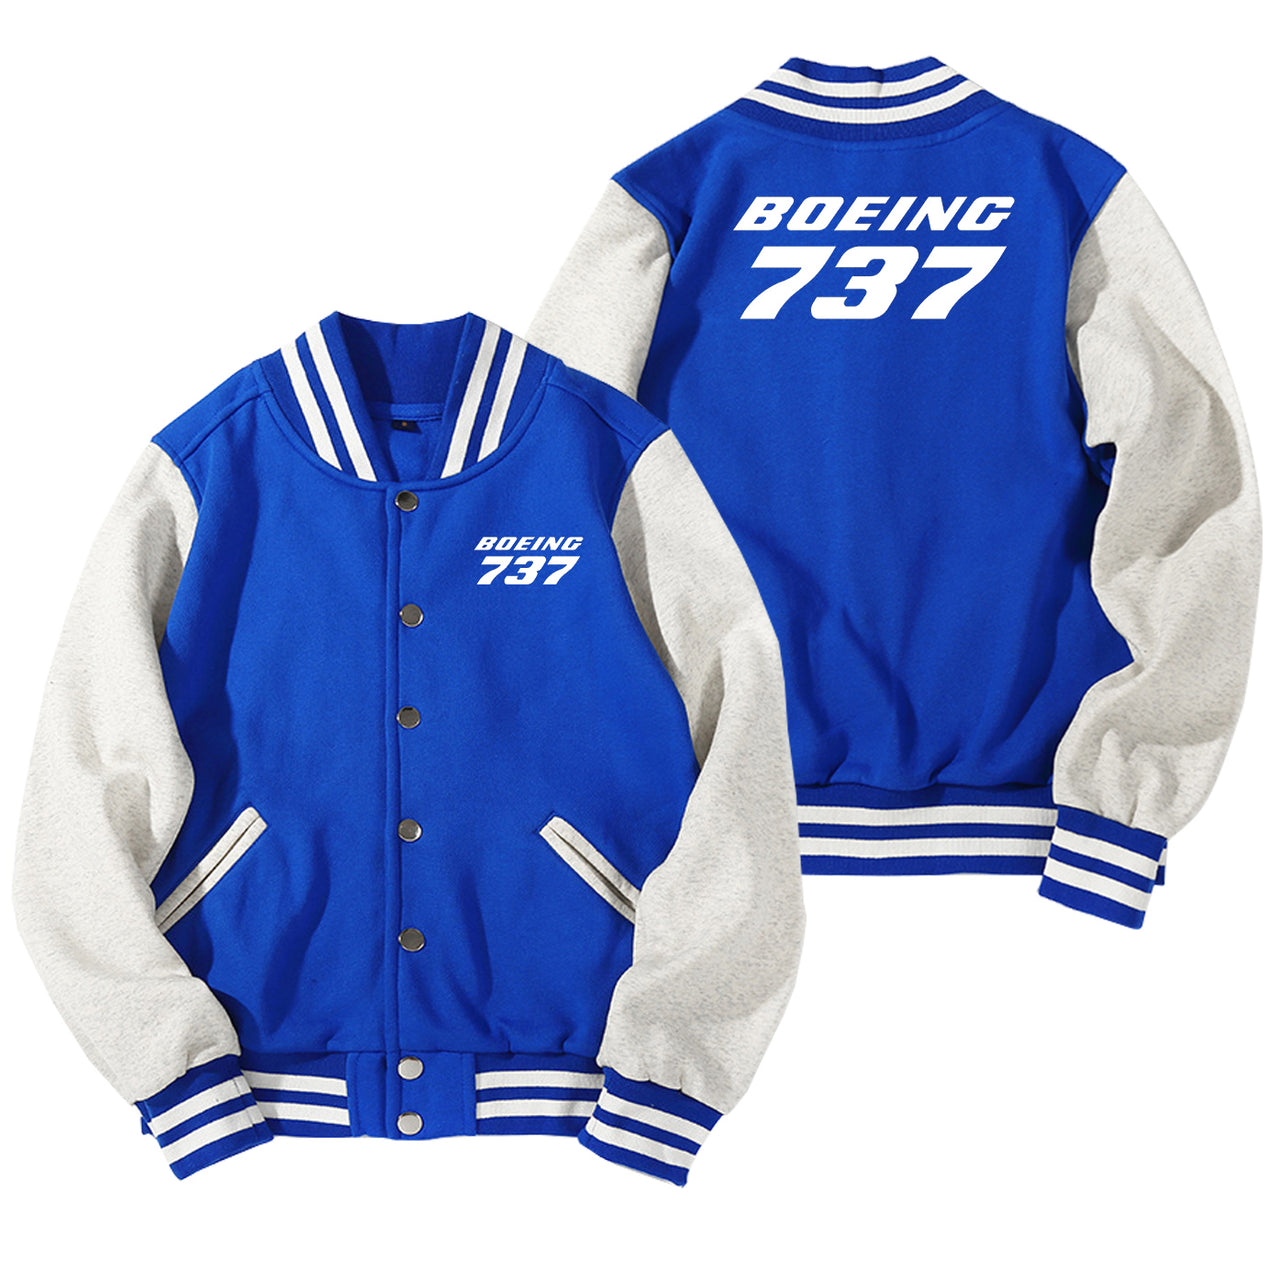 Boeing 737 & Text Designed Baseball Style Jackets